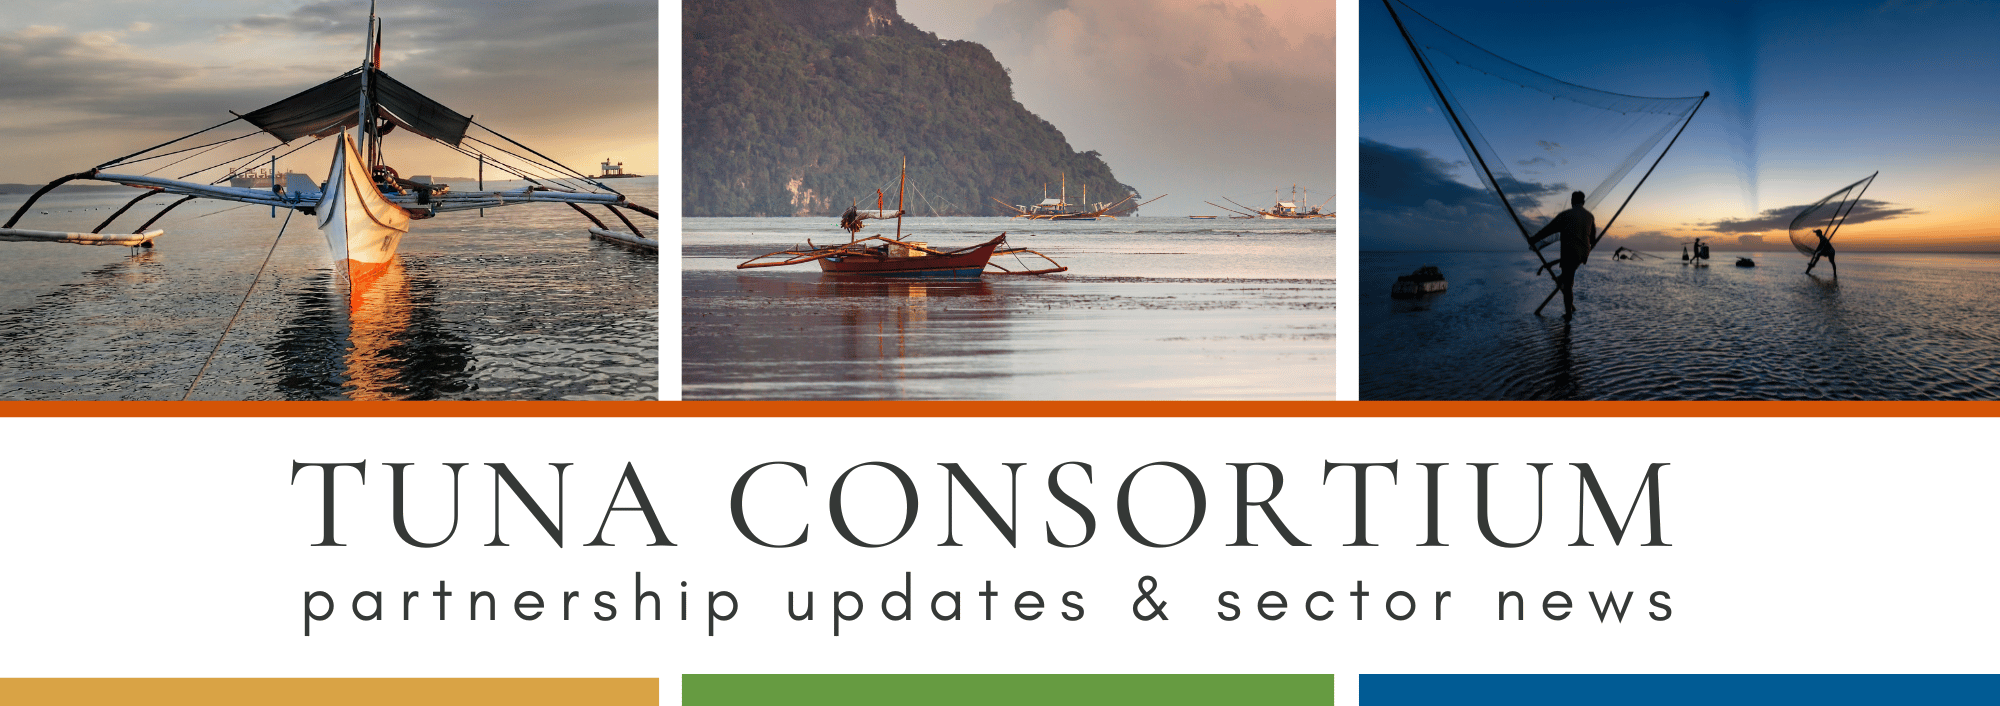 Header for Tuna Consortium Newsletter-1